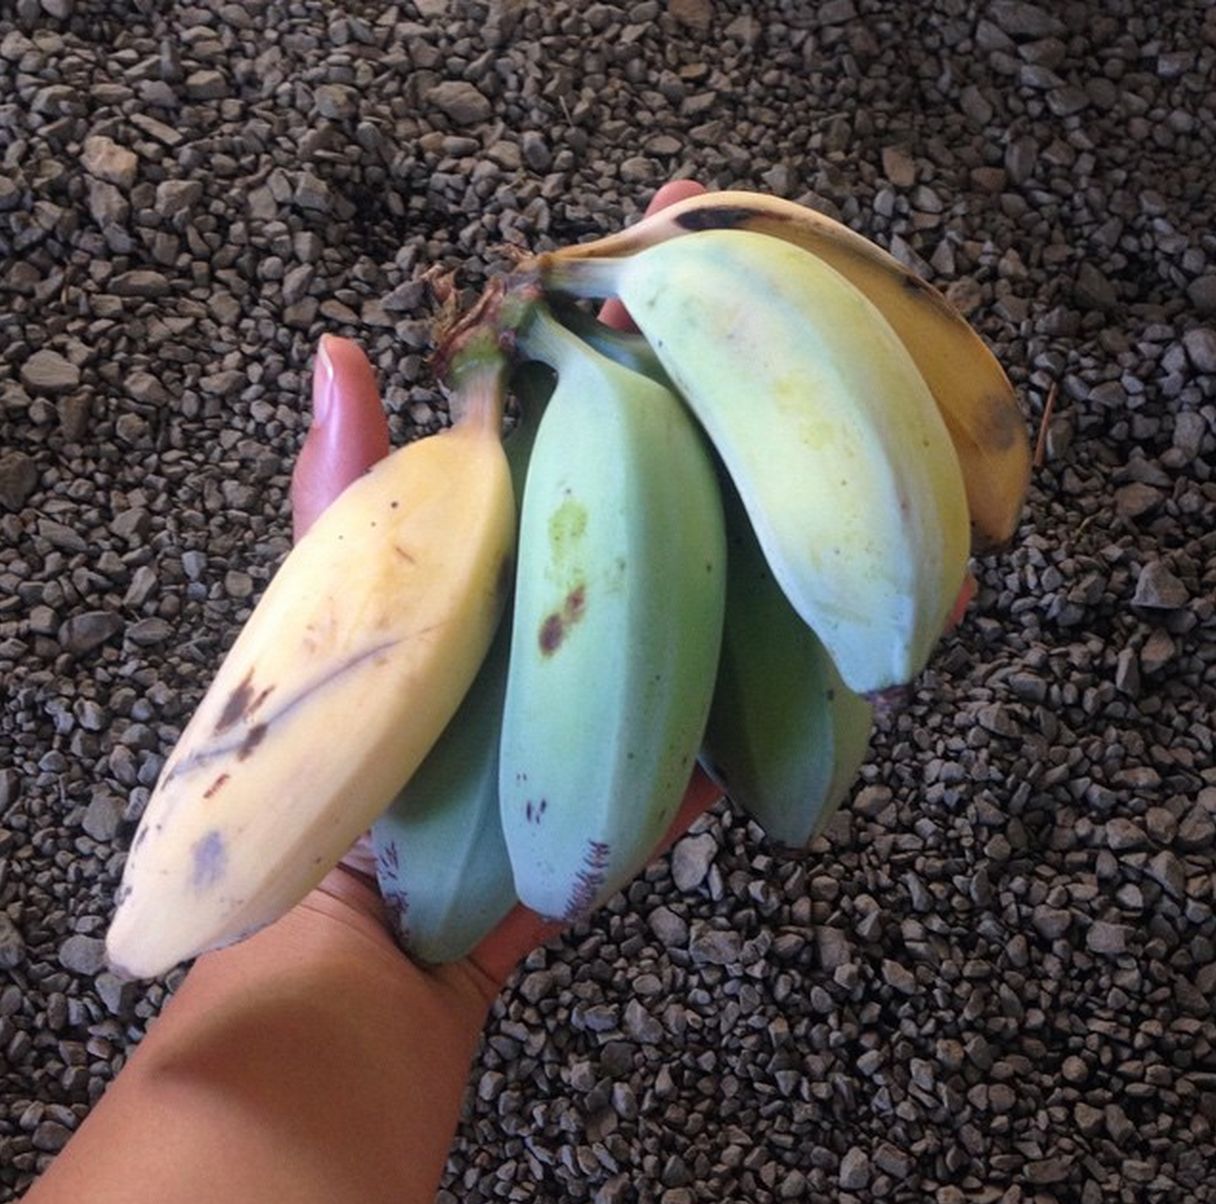 blue java bananas for sale